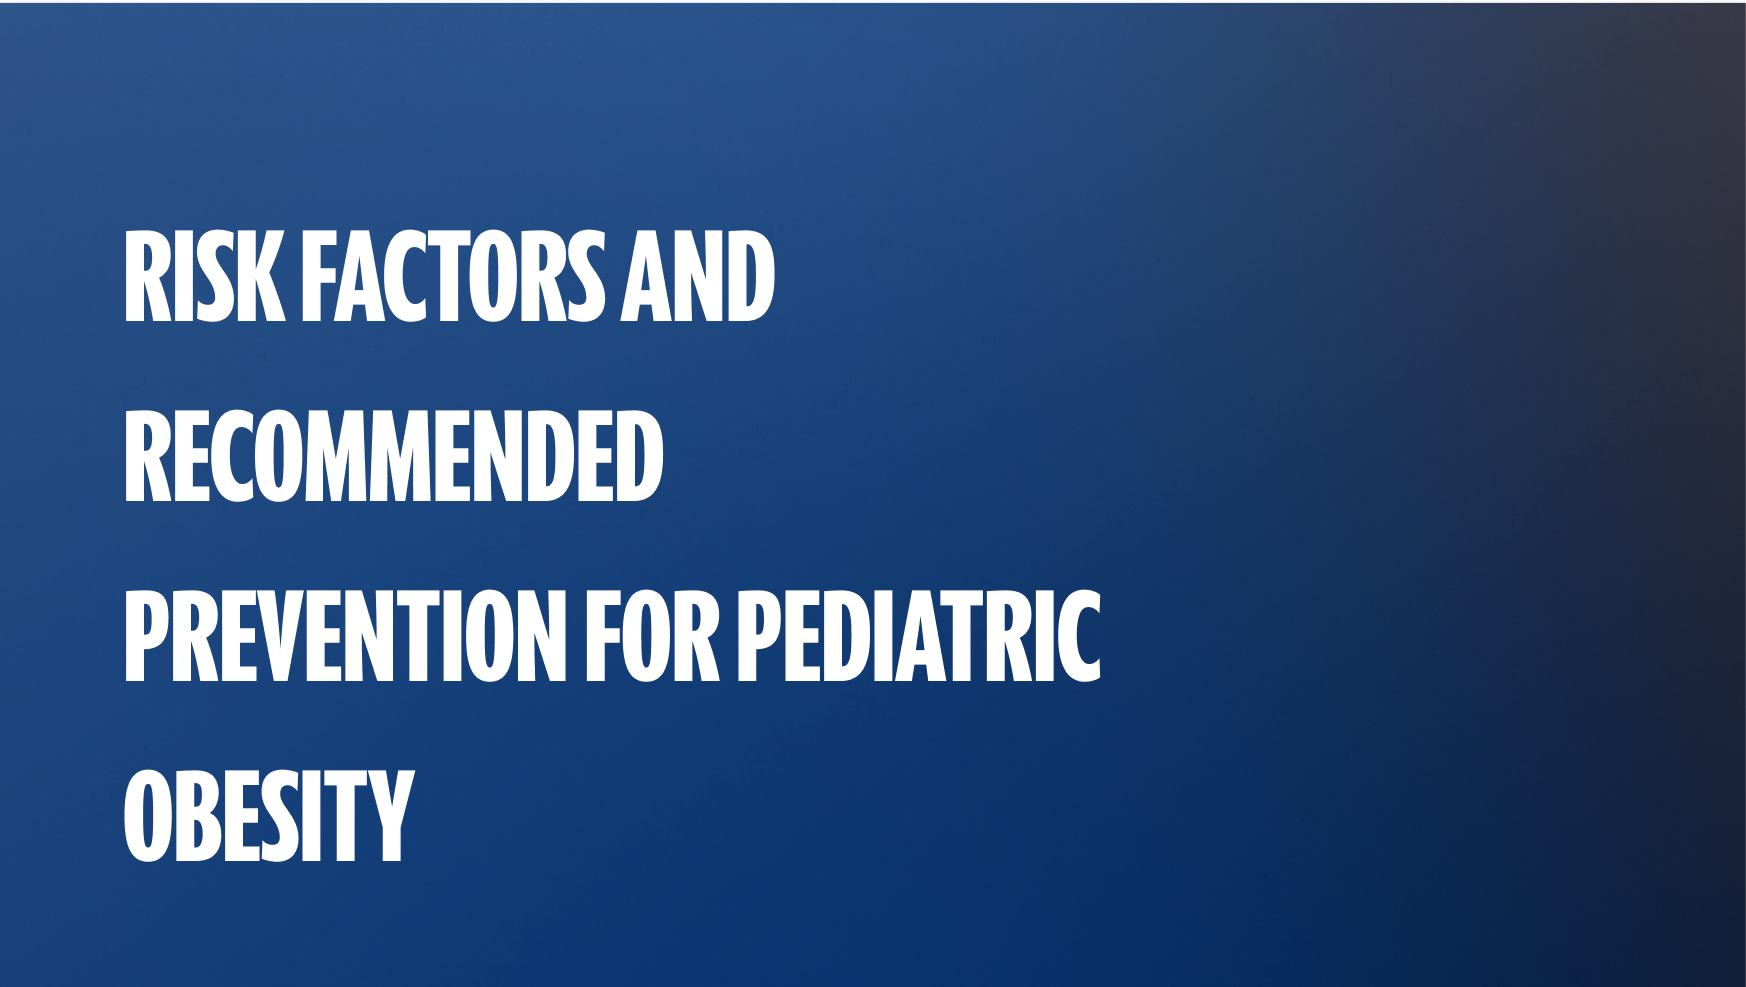 Pediatric obesity risk factors and prevention